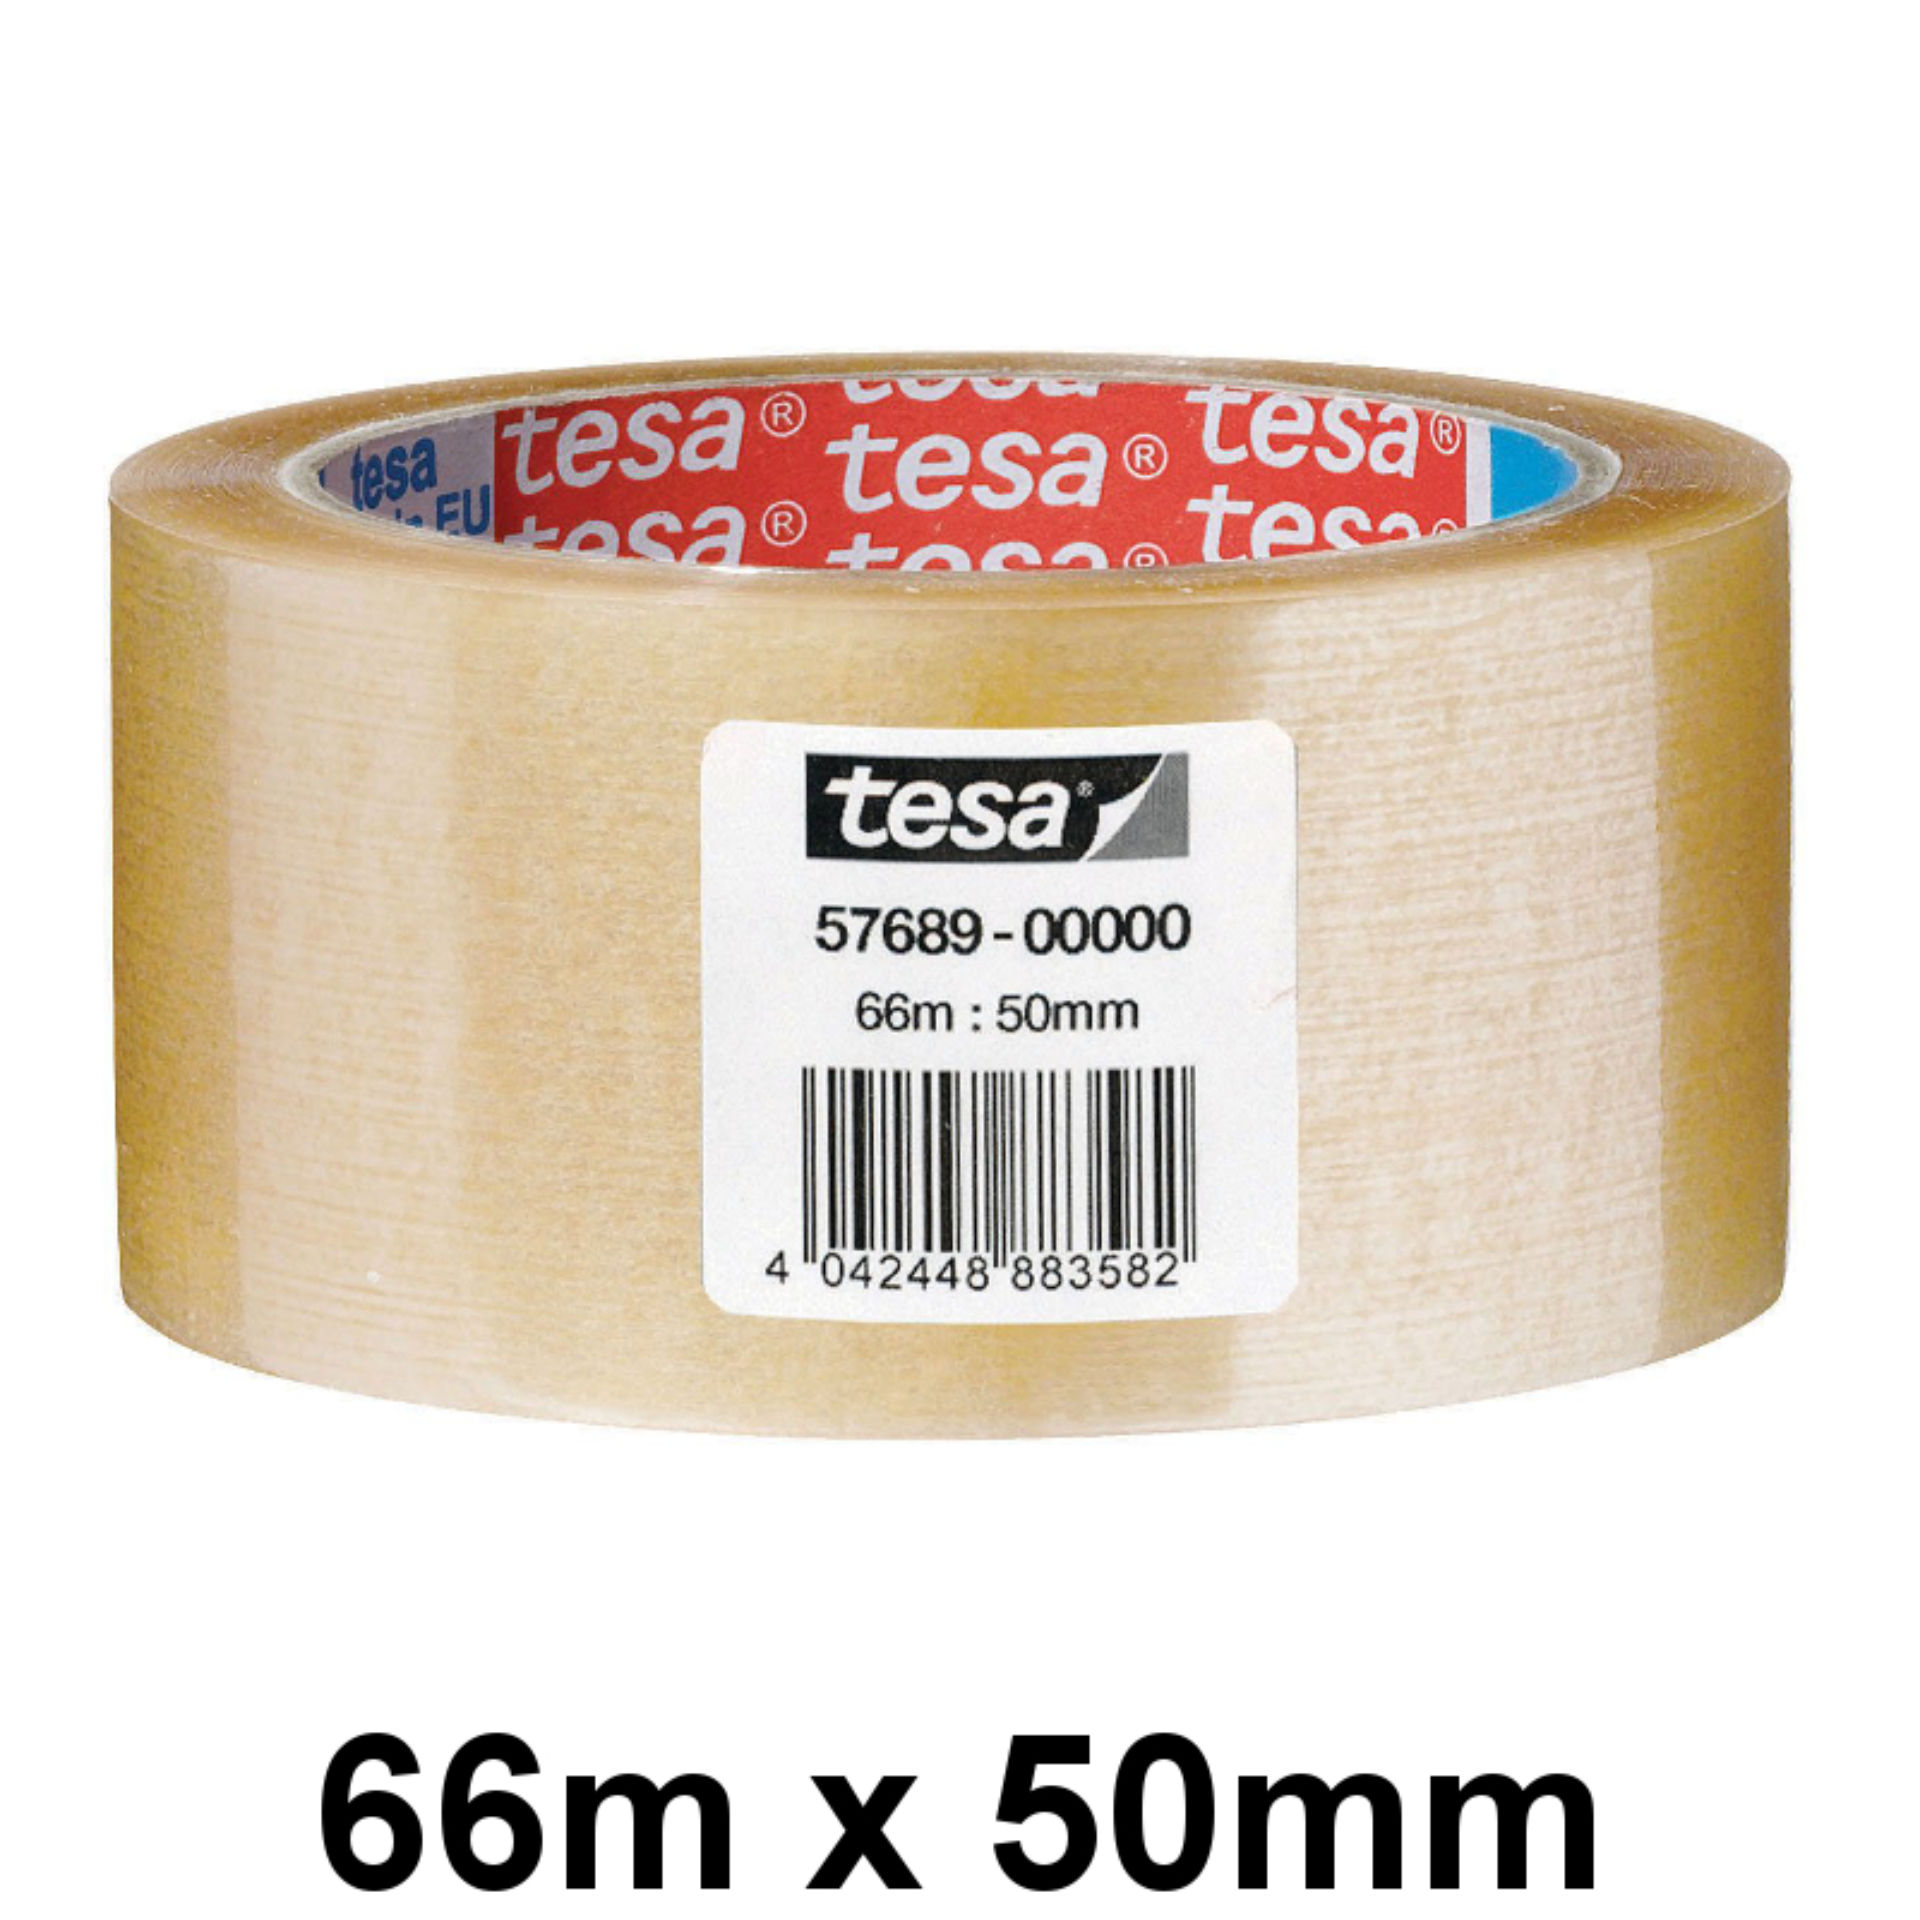 TESA NASTRO ADES. TRASP. 66M X 50MM (57689)Tesa